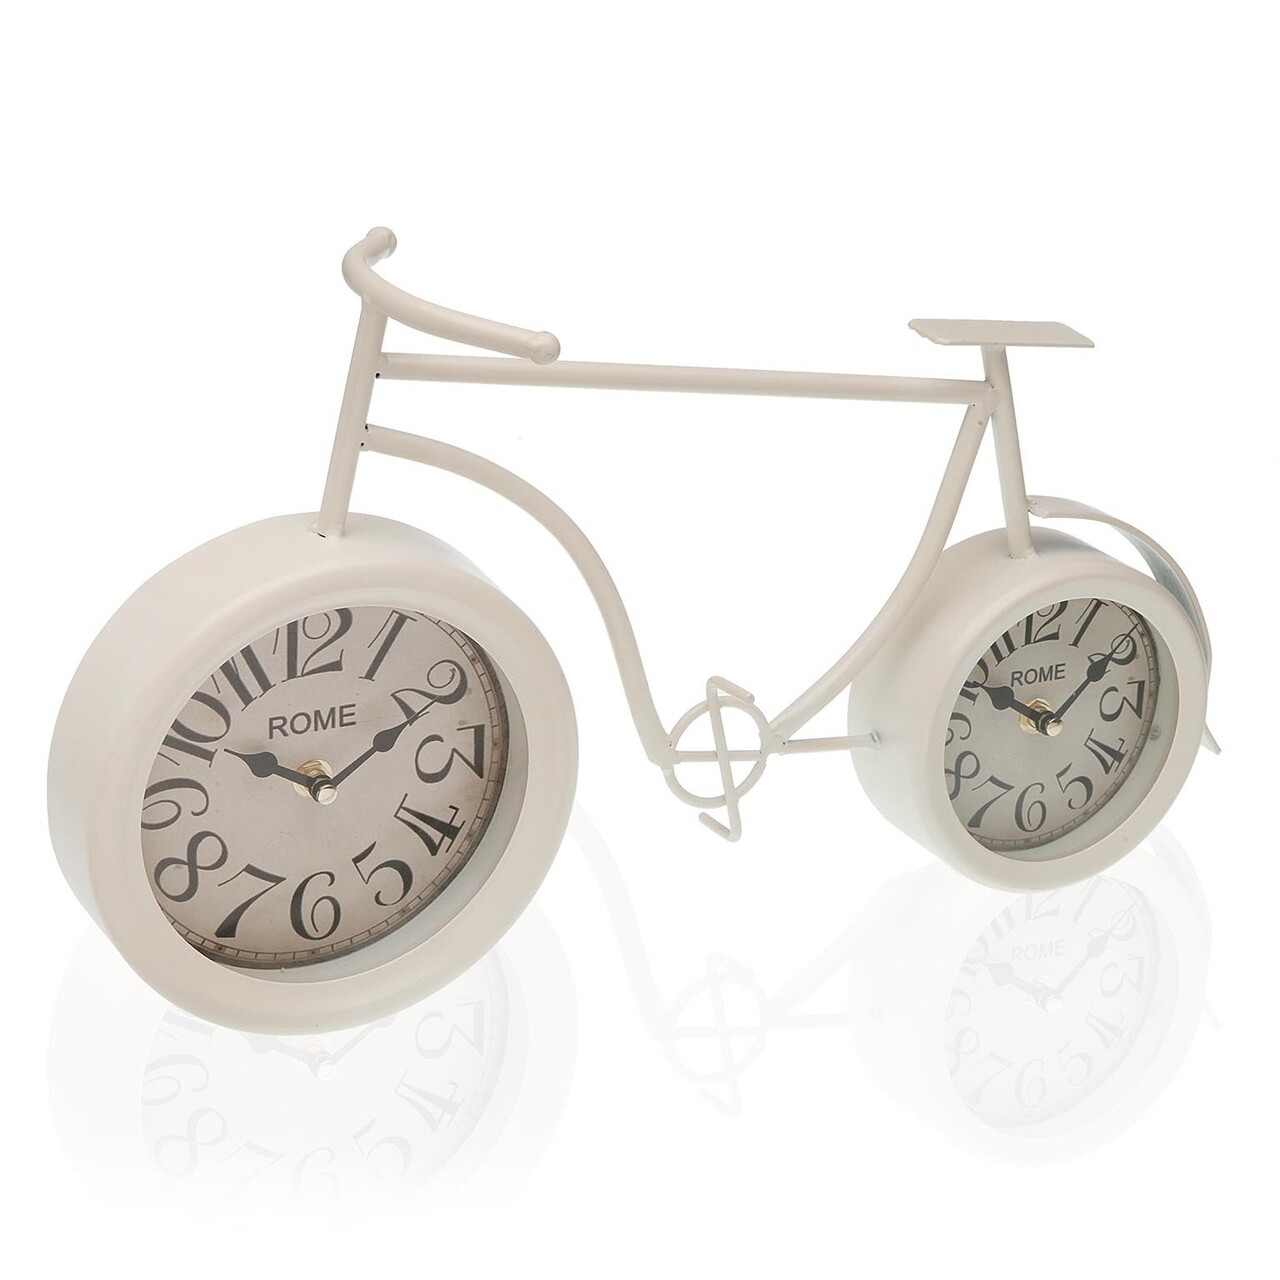 Bicycle Asztali óra, Versa, 36.5x10x20 cm, vas, fehér